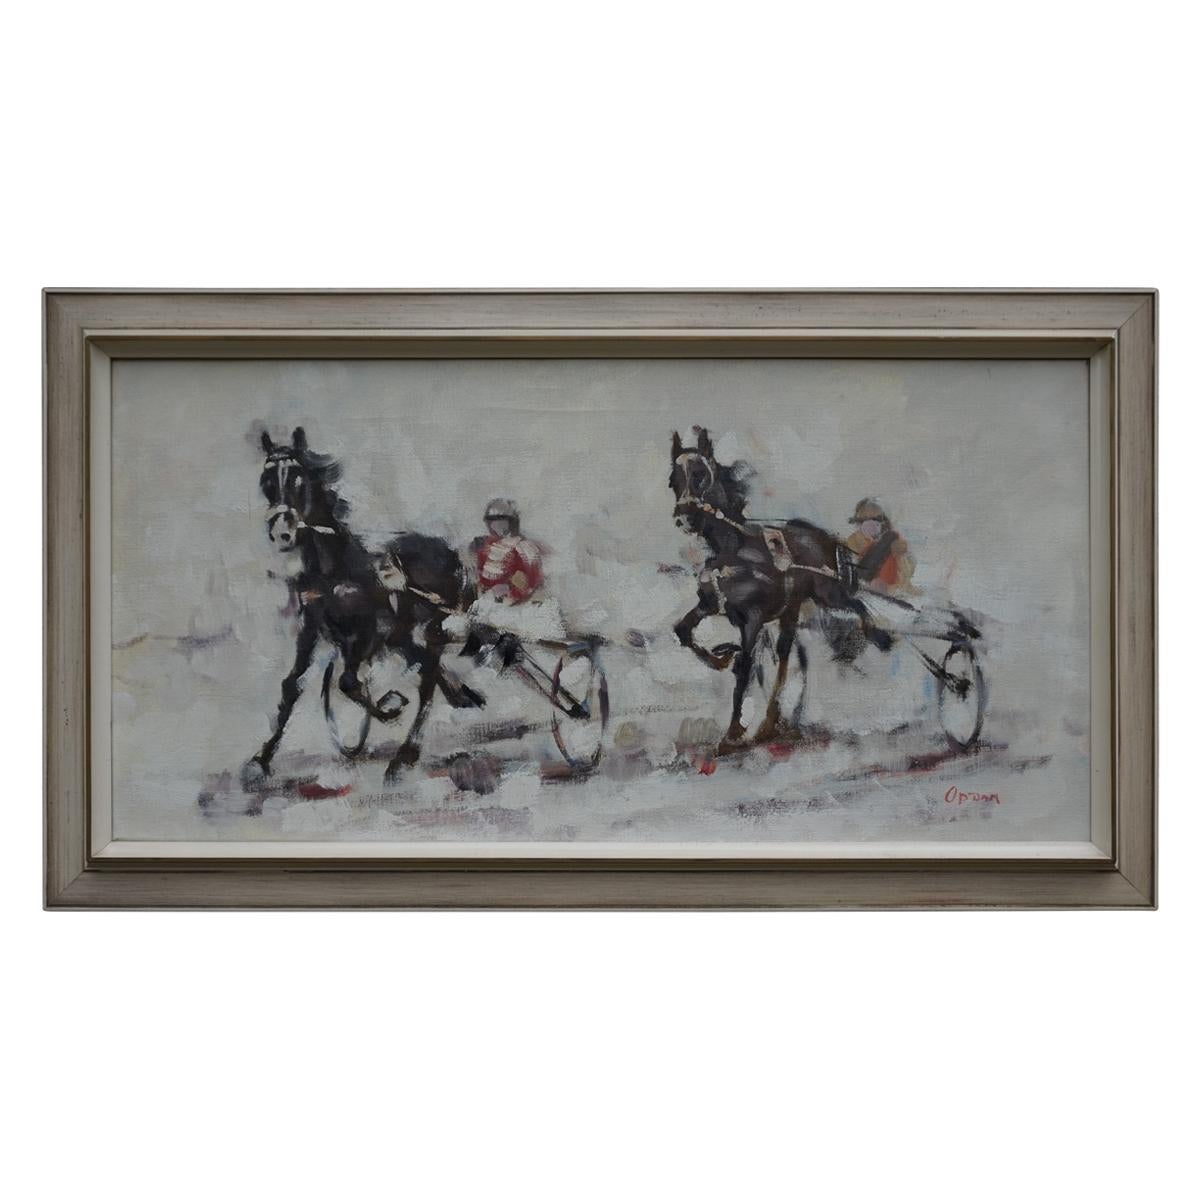 Cuadro semiabstracto al óleo sobre lienzo de mediados de siglo moderno de carreras de caballos